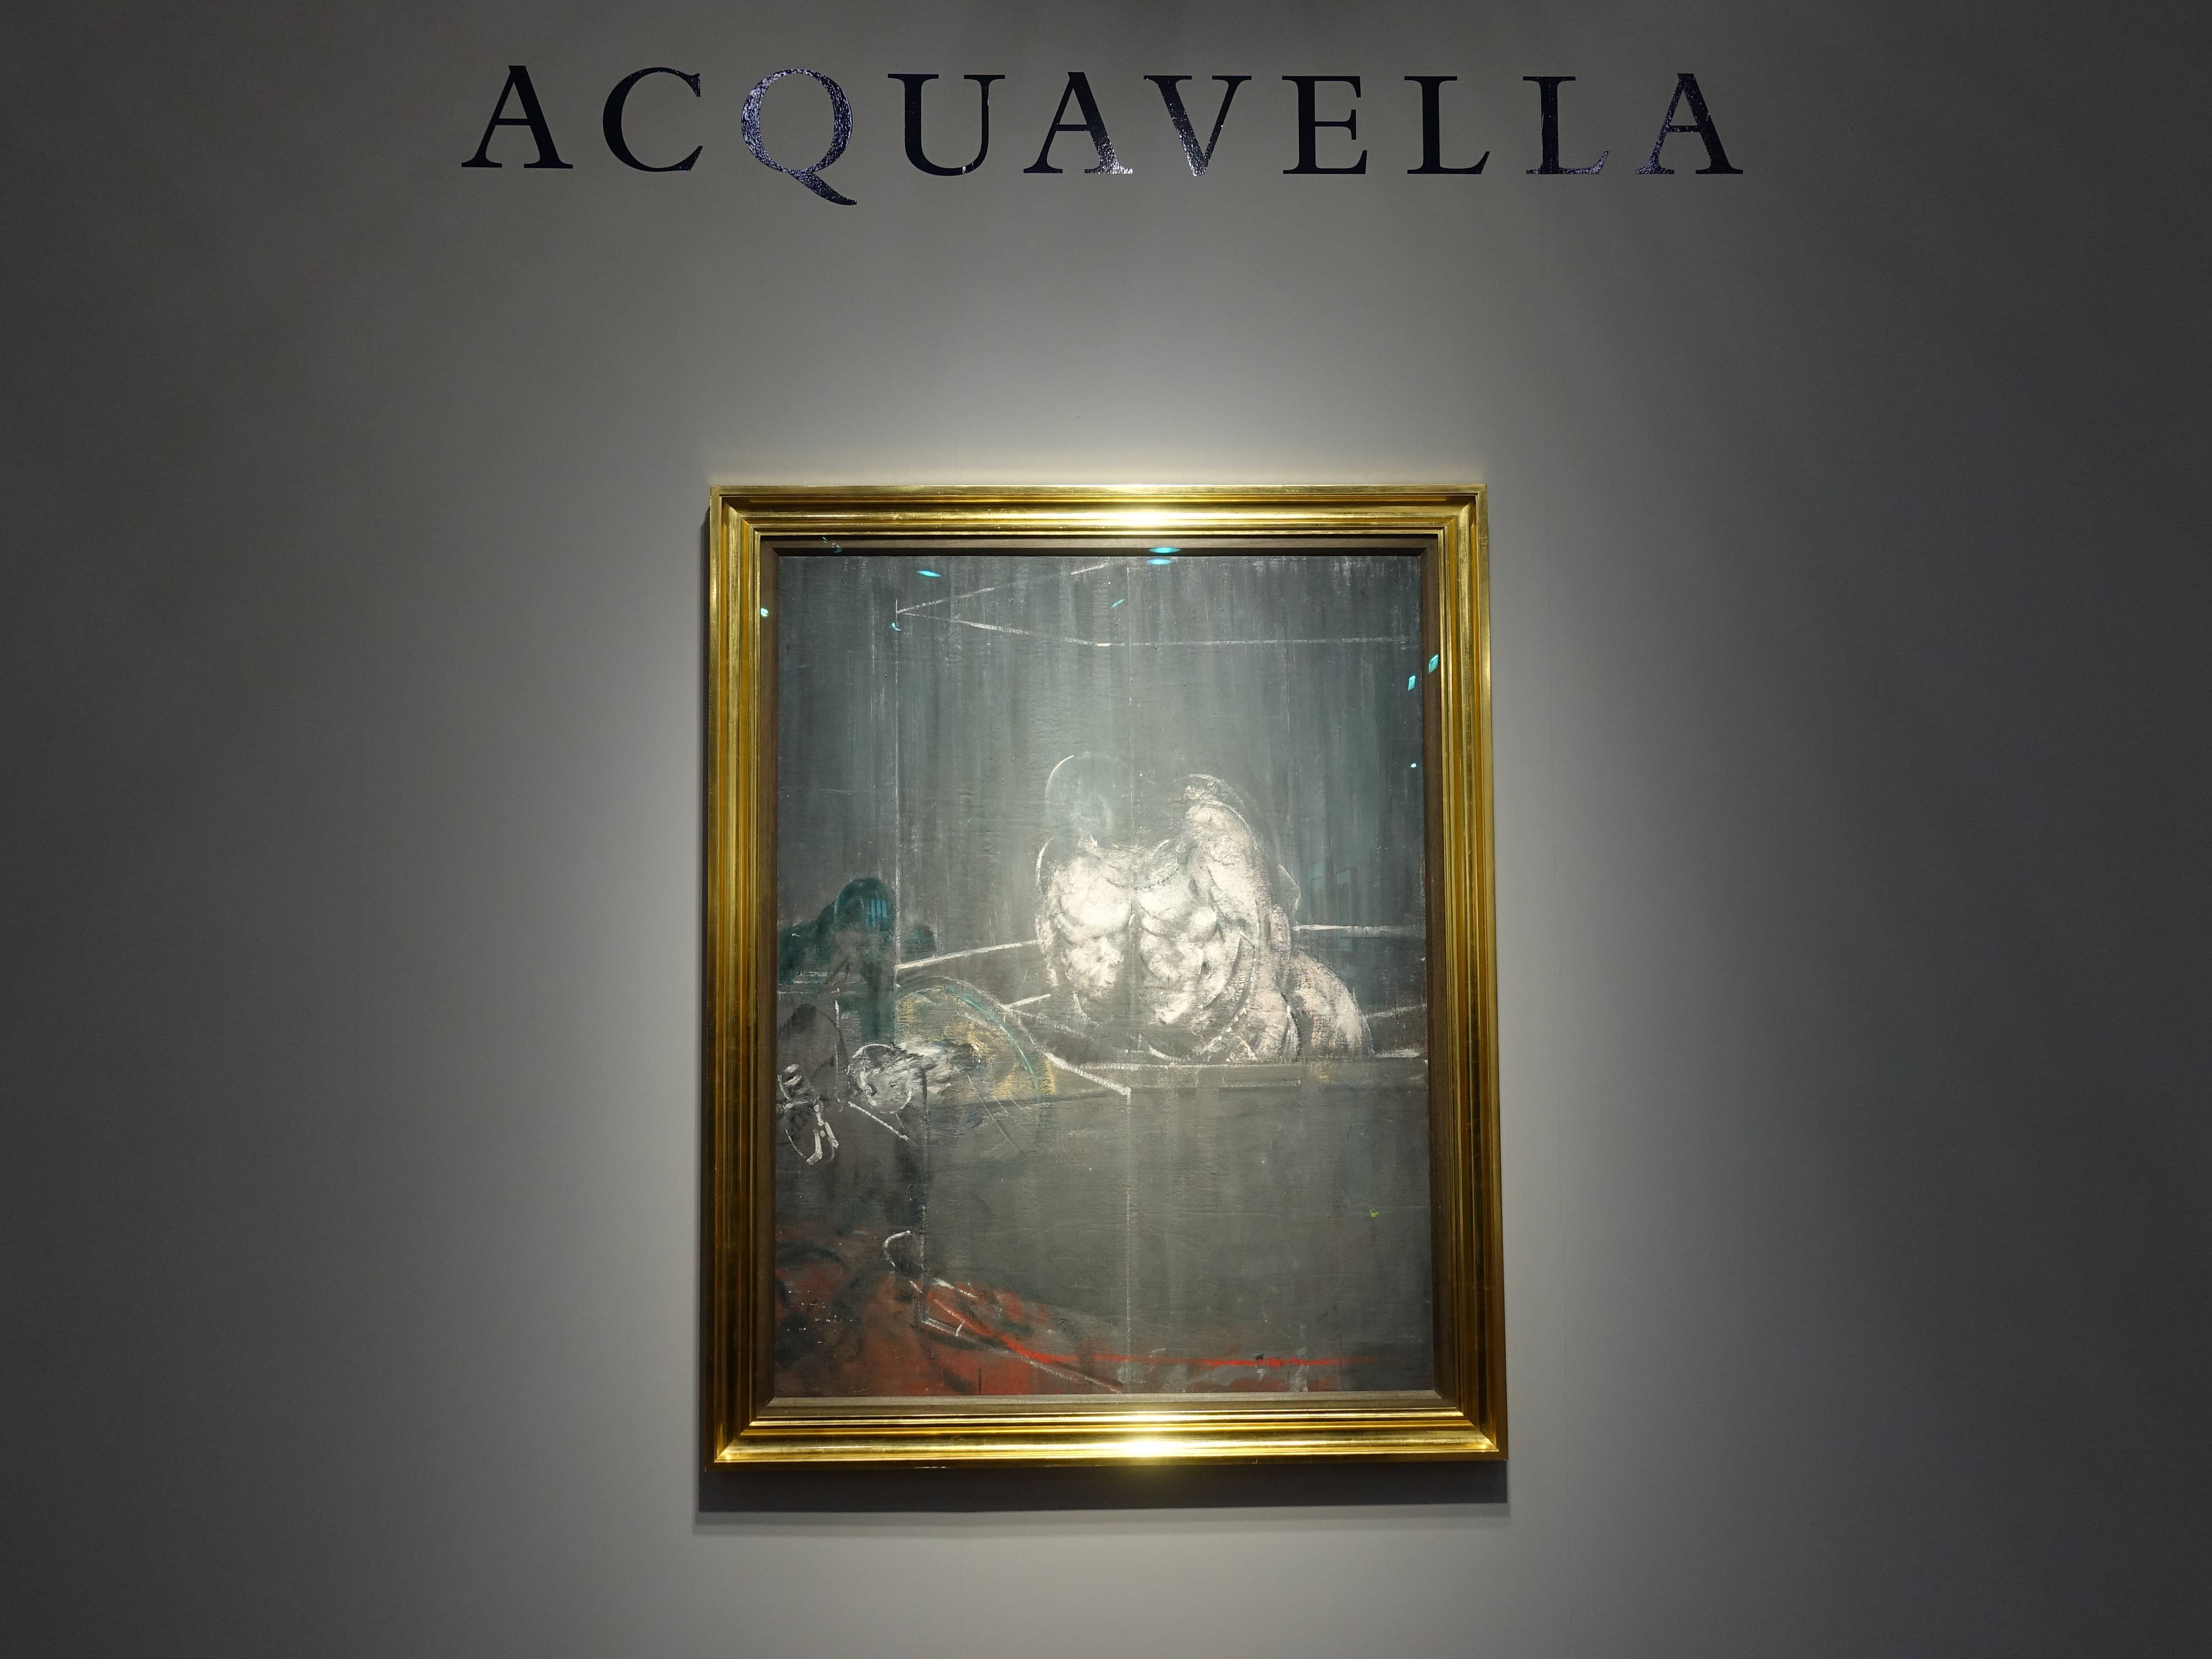 Acquavella Galleries 展出藝術家法蘭西斯培根作品。